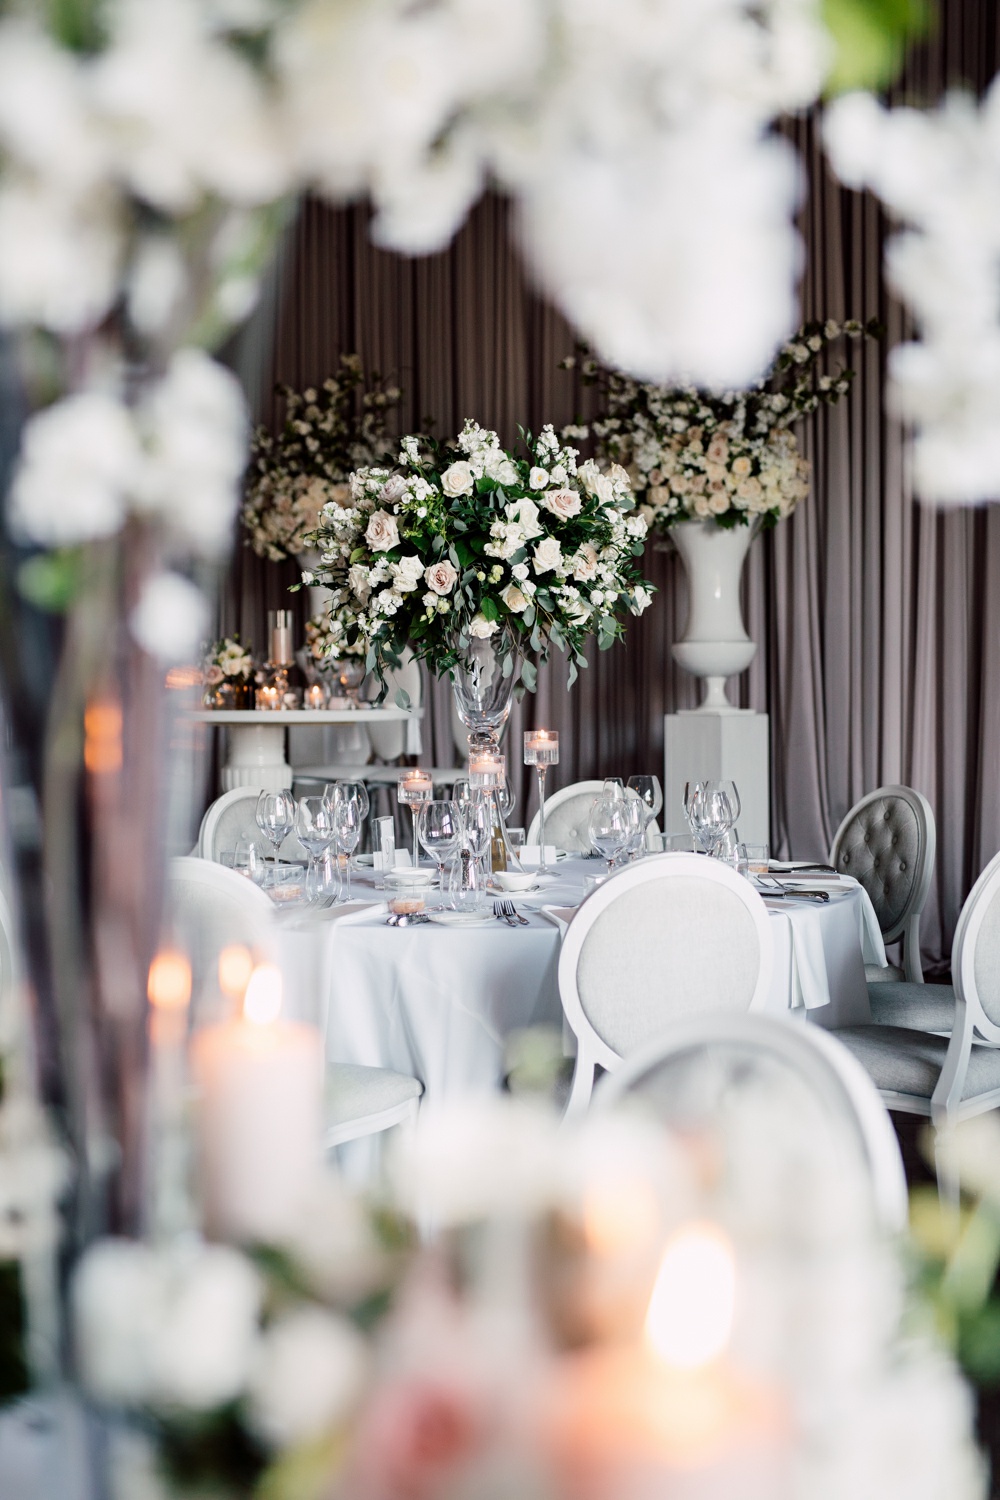 Elegant white and grey wedding venue decor